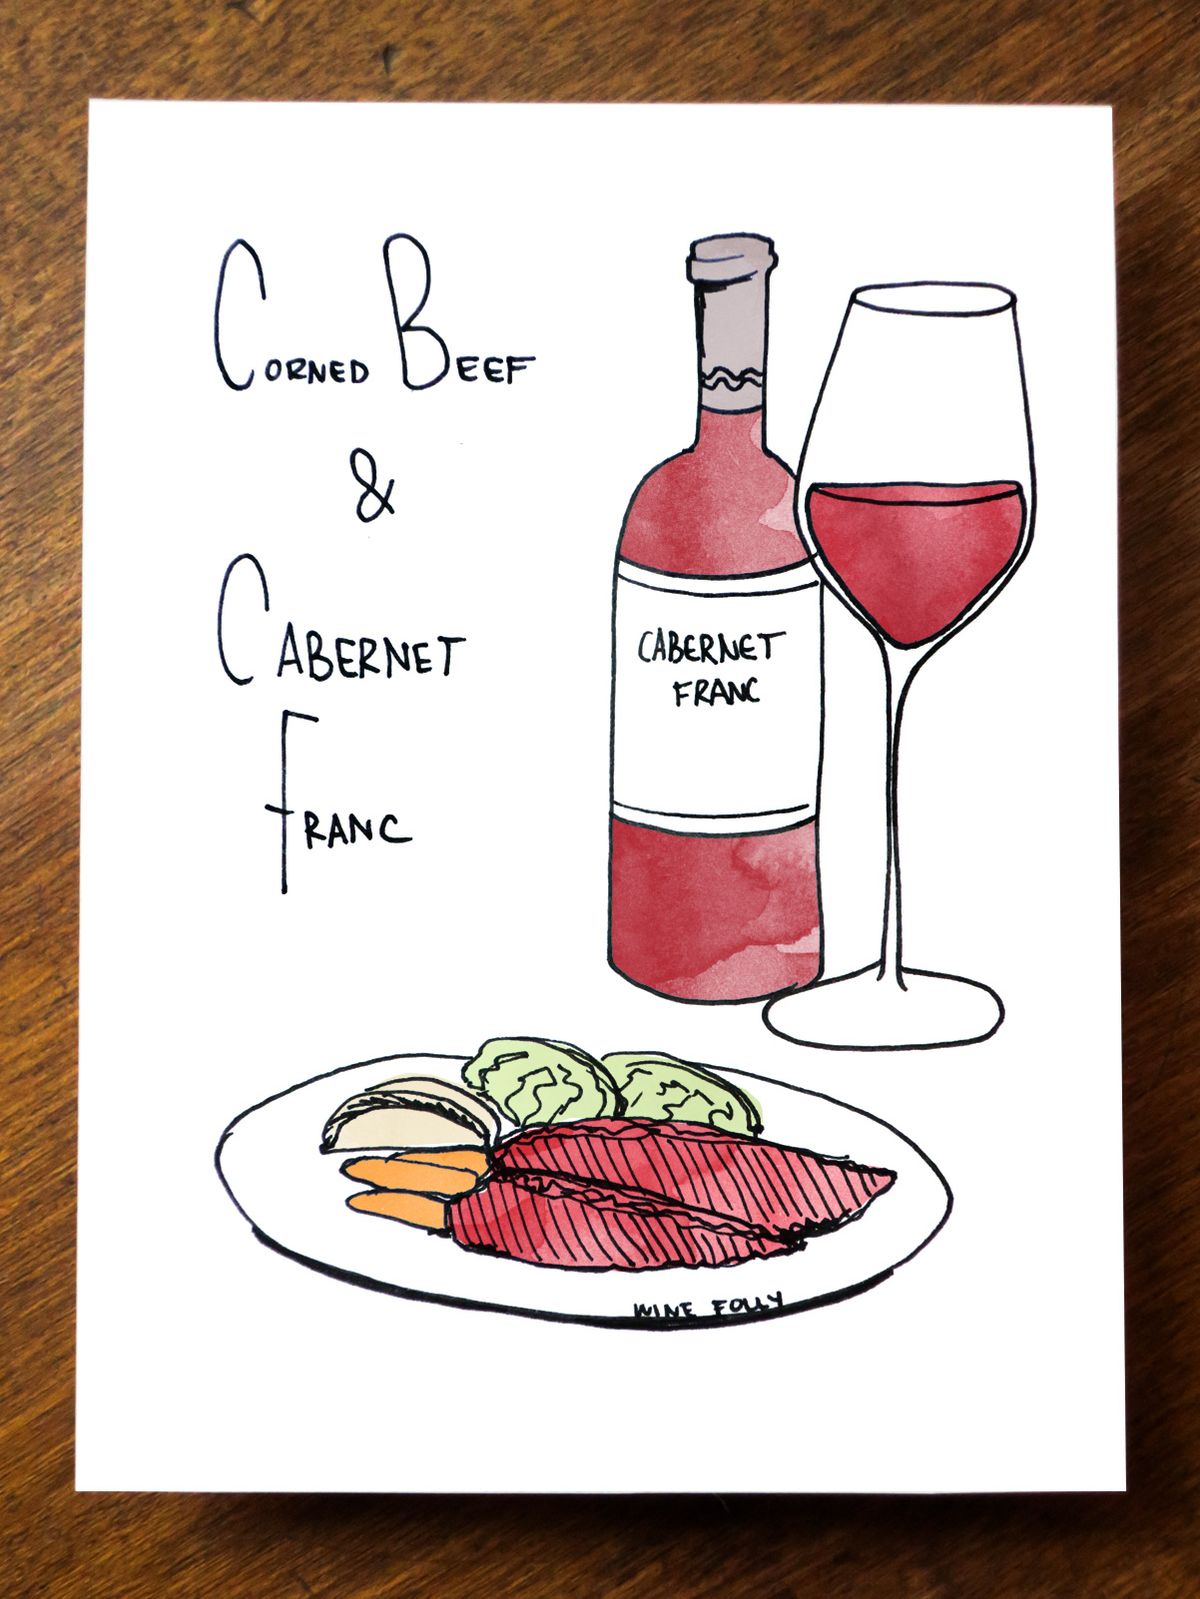 corned-beef-accord-vin-cabernet-franc